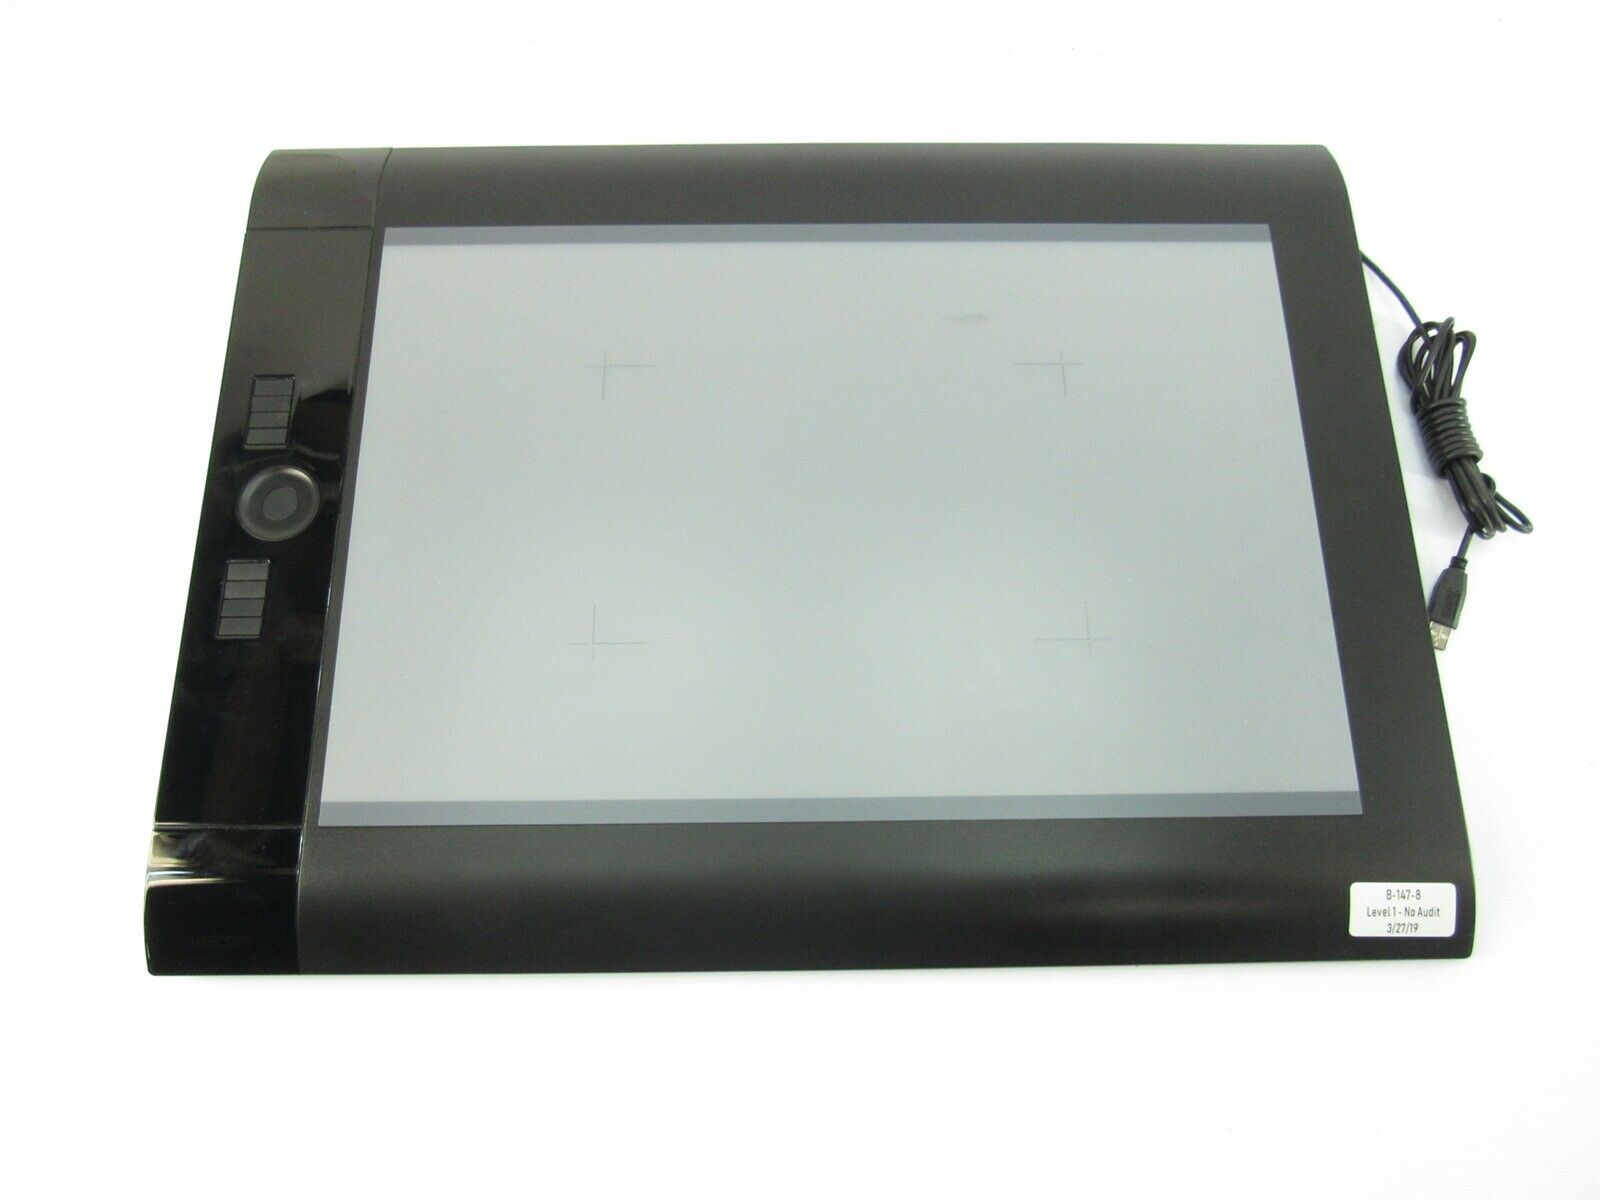 Wacom PTK-1240 Intuos 4 XL USB Graphics / Drawing Tablet (No Stylus)